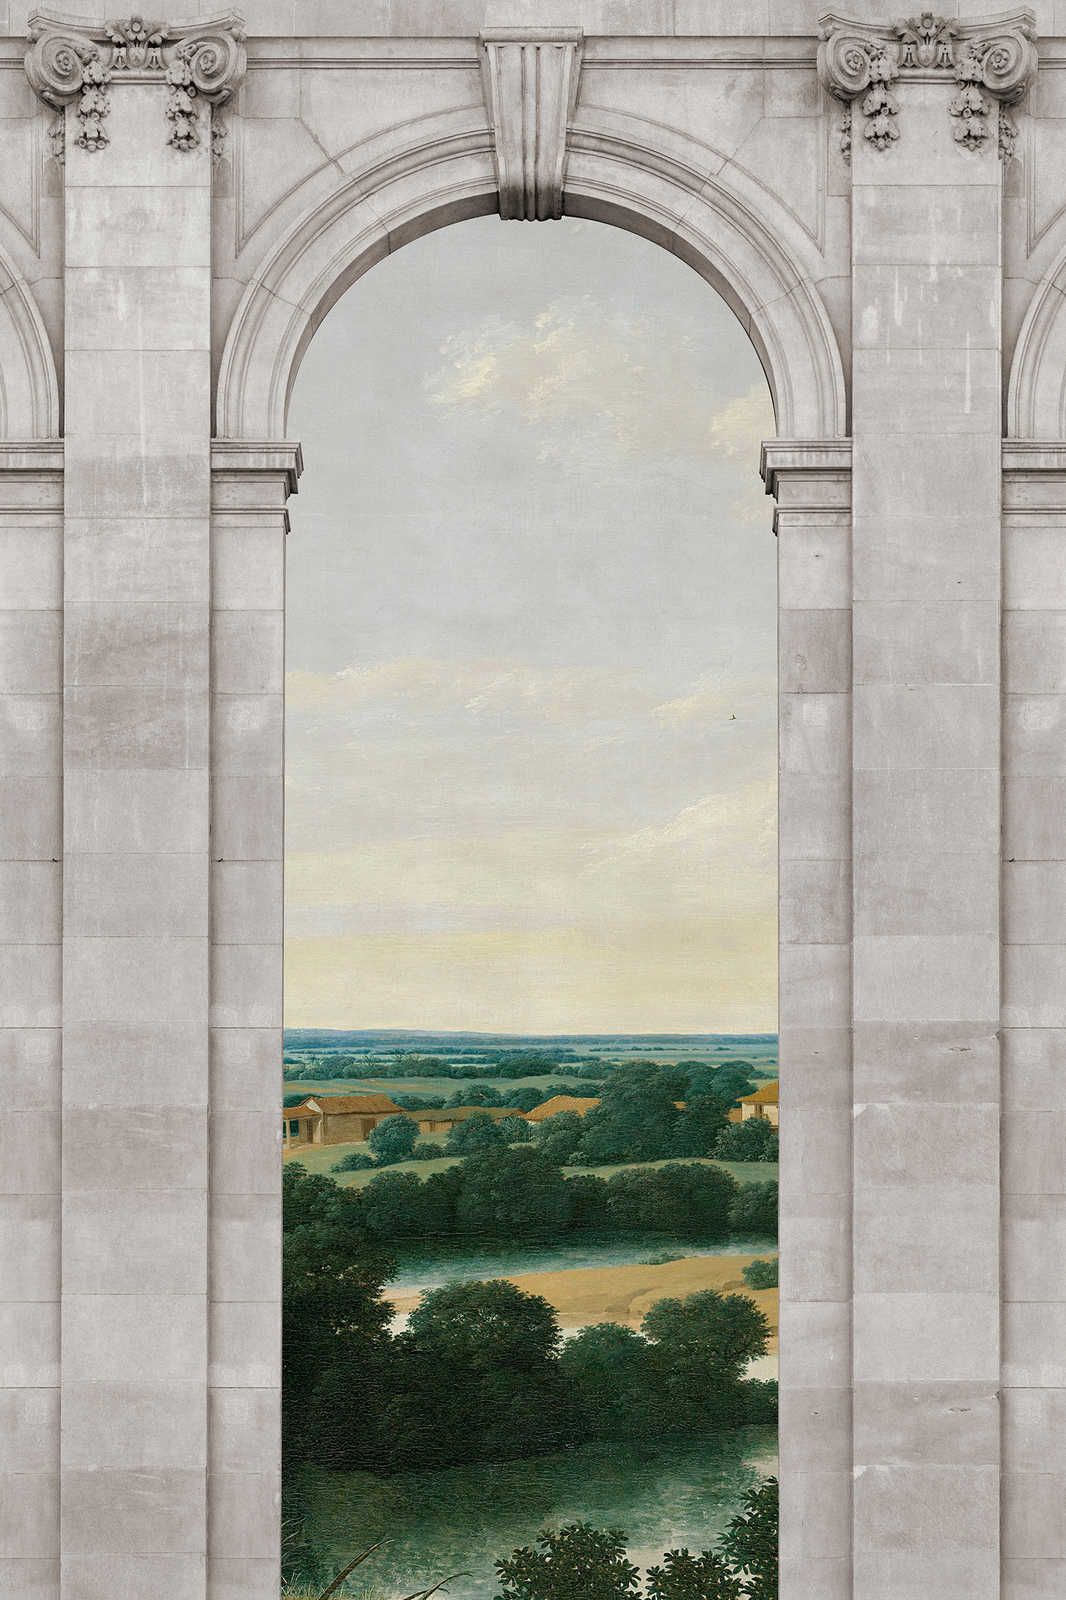             Castello 2 - Fenster Leinwandbild Rundbogen & Ausblick Landschaft – 1,20 m x 0,80 m
        